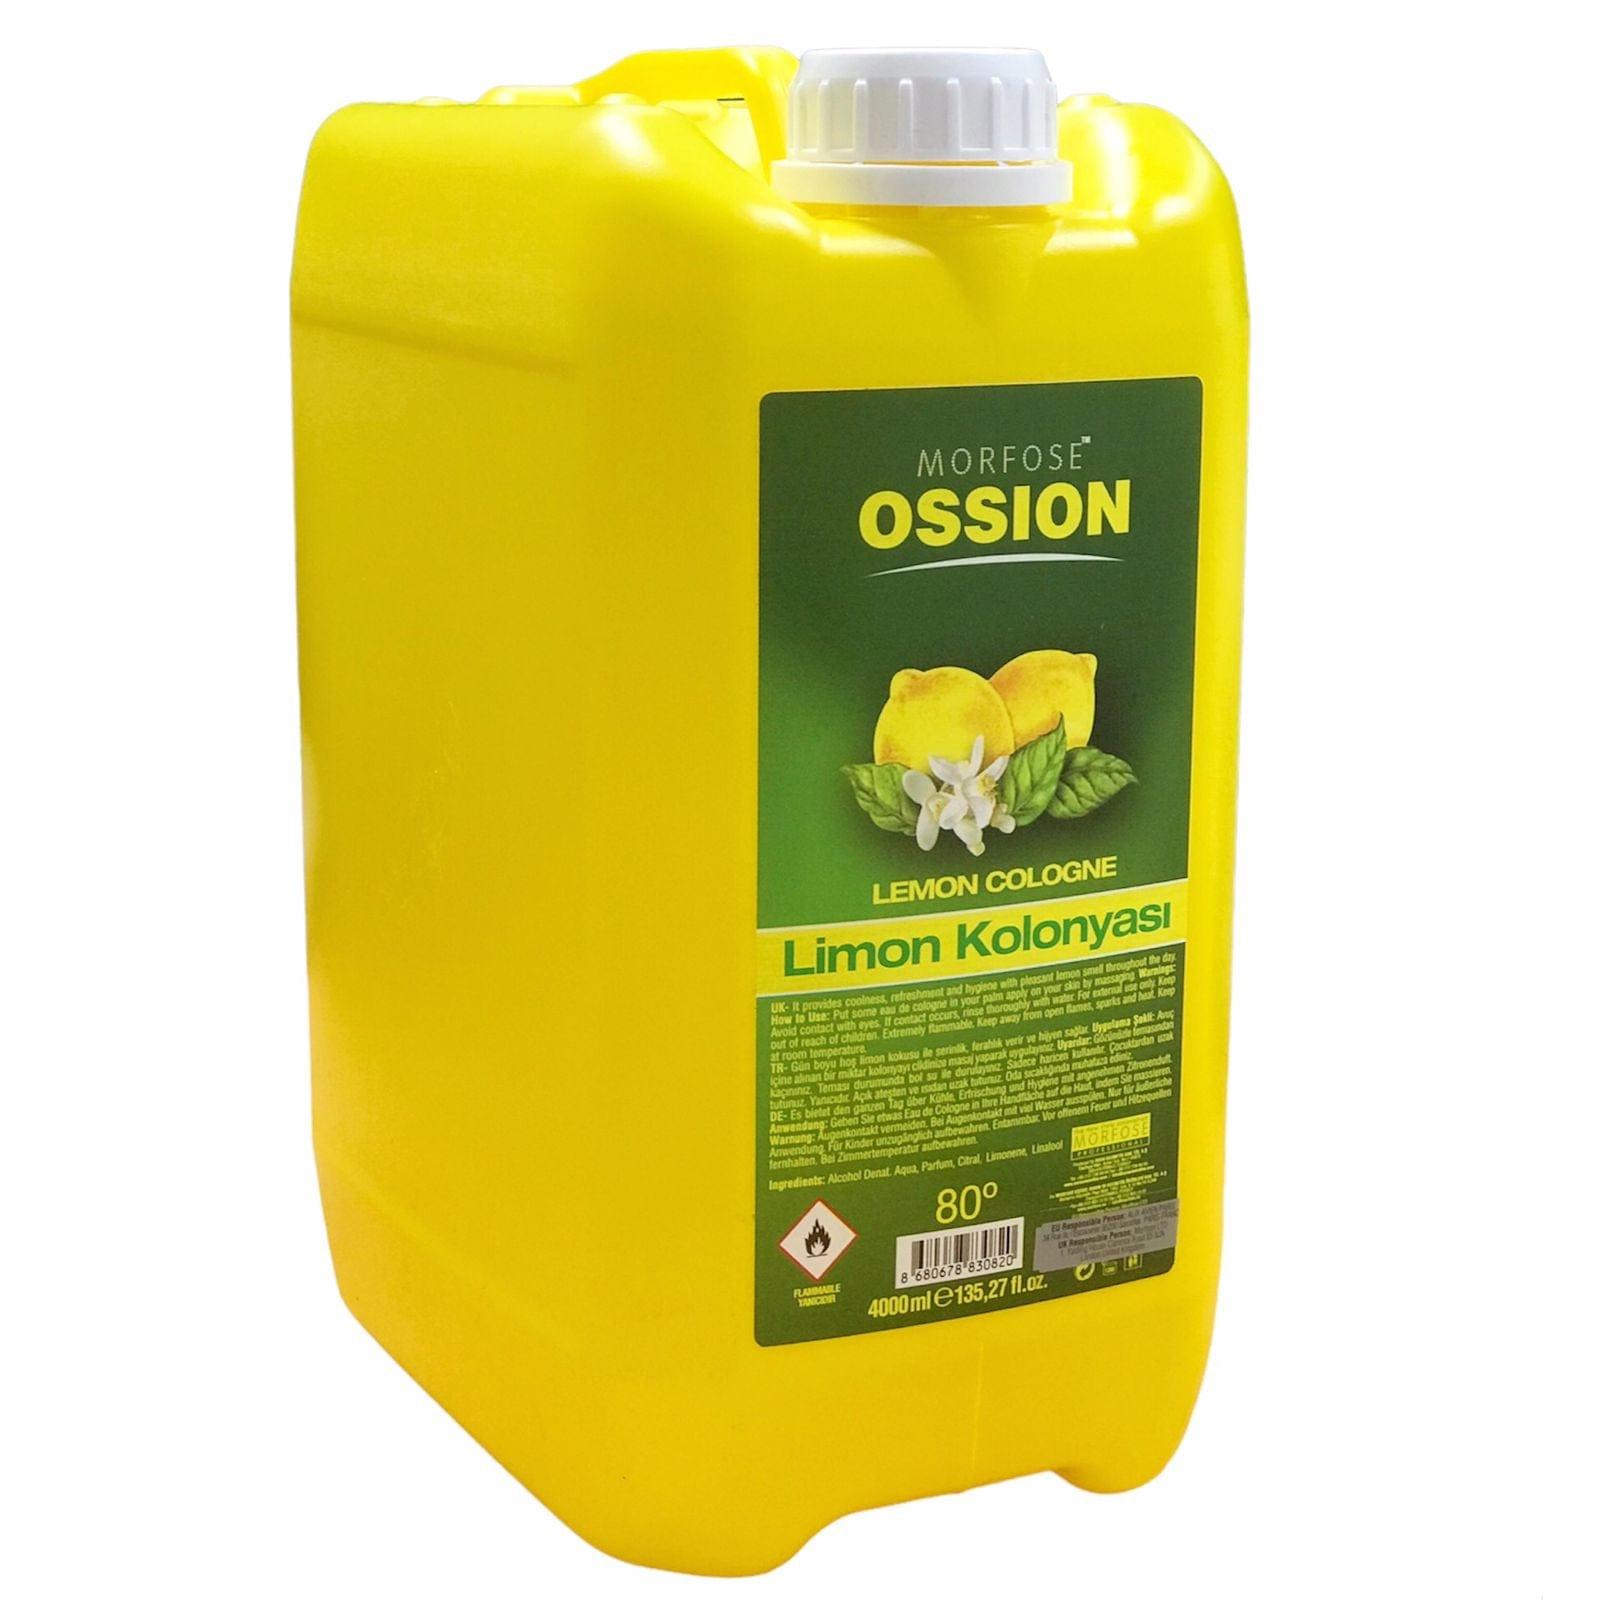 Morfose Ossion Lemon Cologne 4000ml